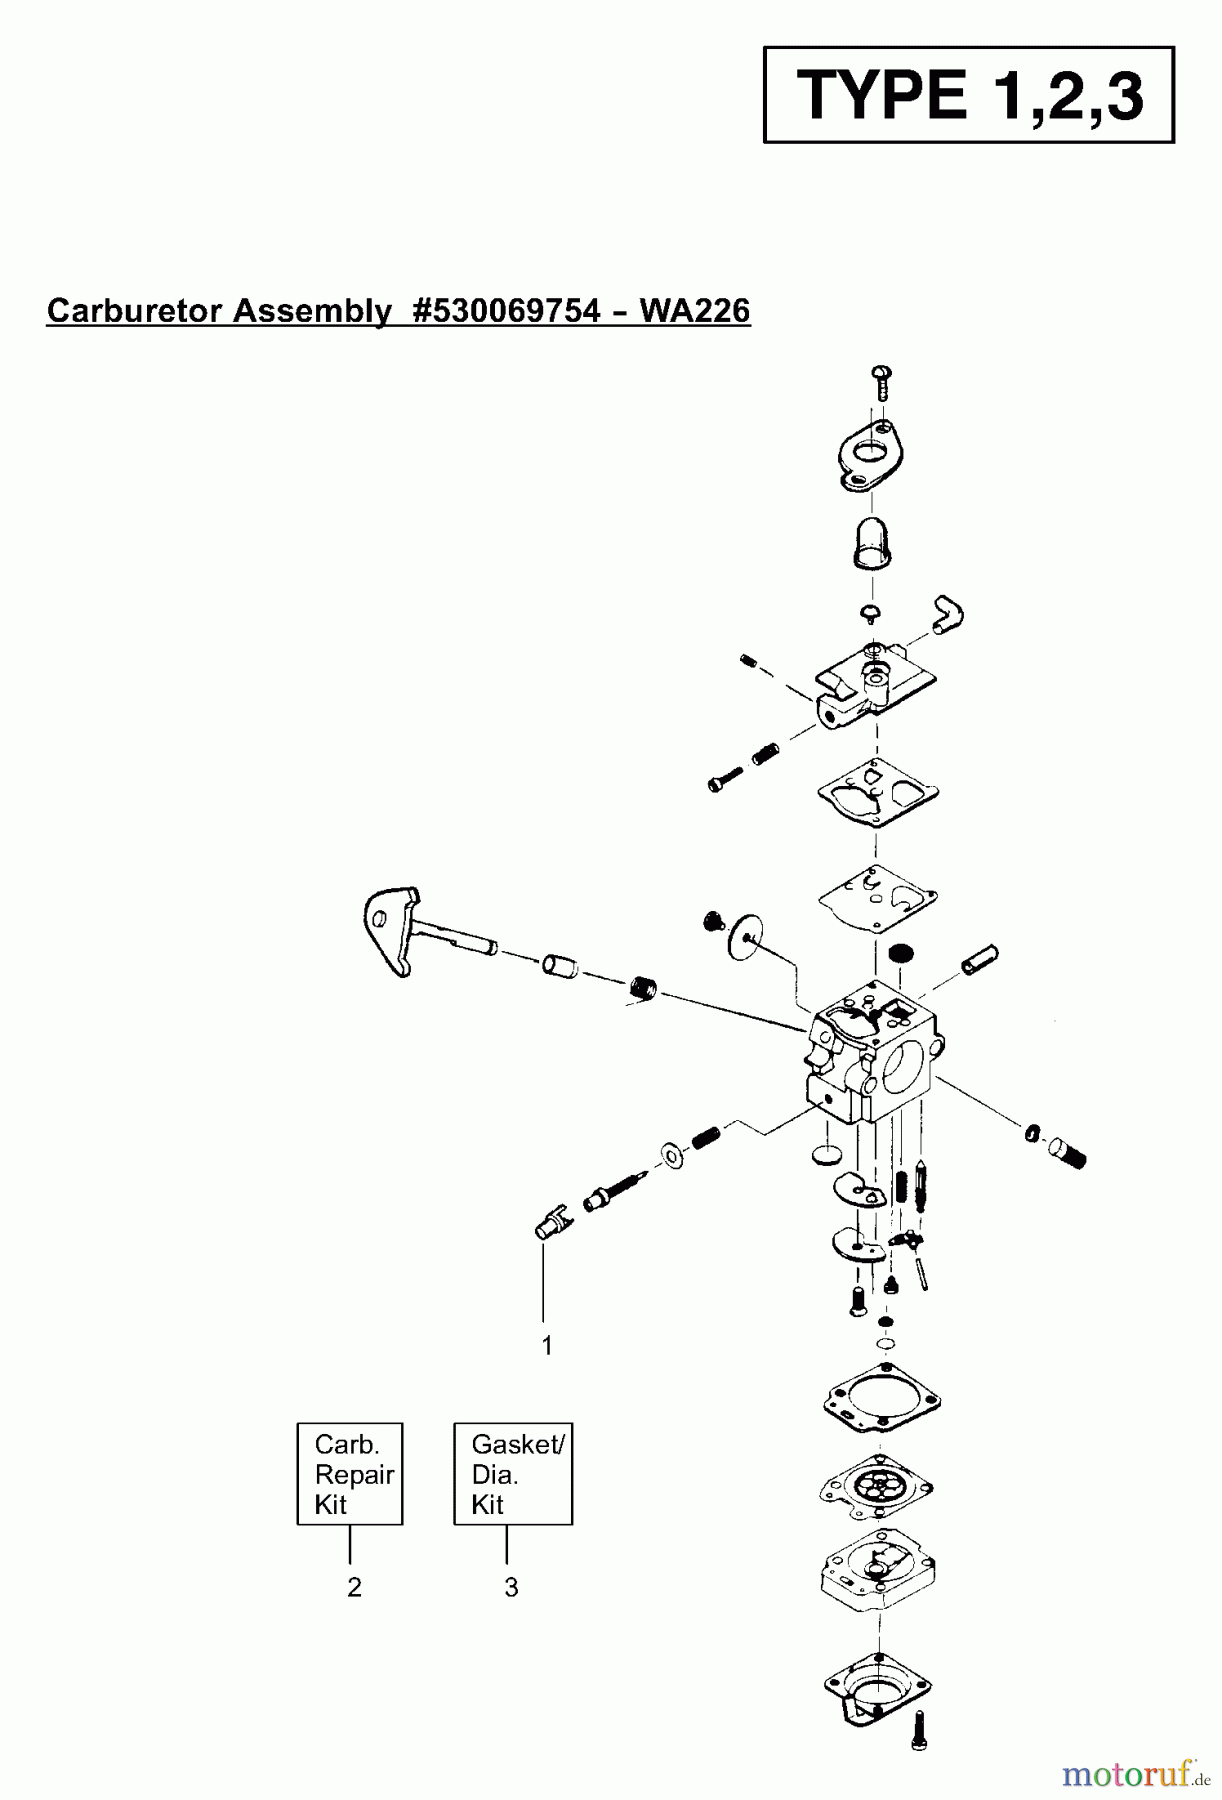  Poulan / Weed Eater Motorsensen, Trimmer Twistn Edge (Type 2) - Weed Eater String Trimmer Carburetor Assembly (WA226) P/N 530069754